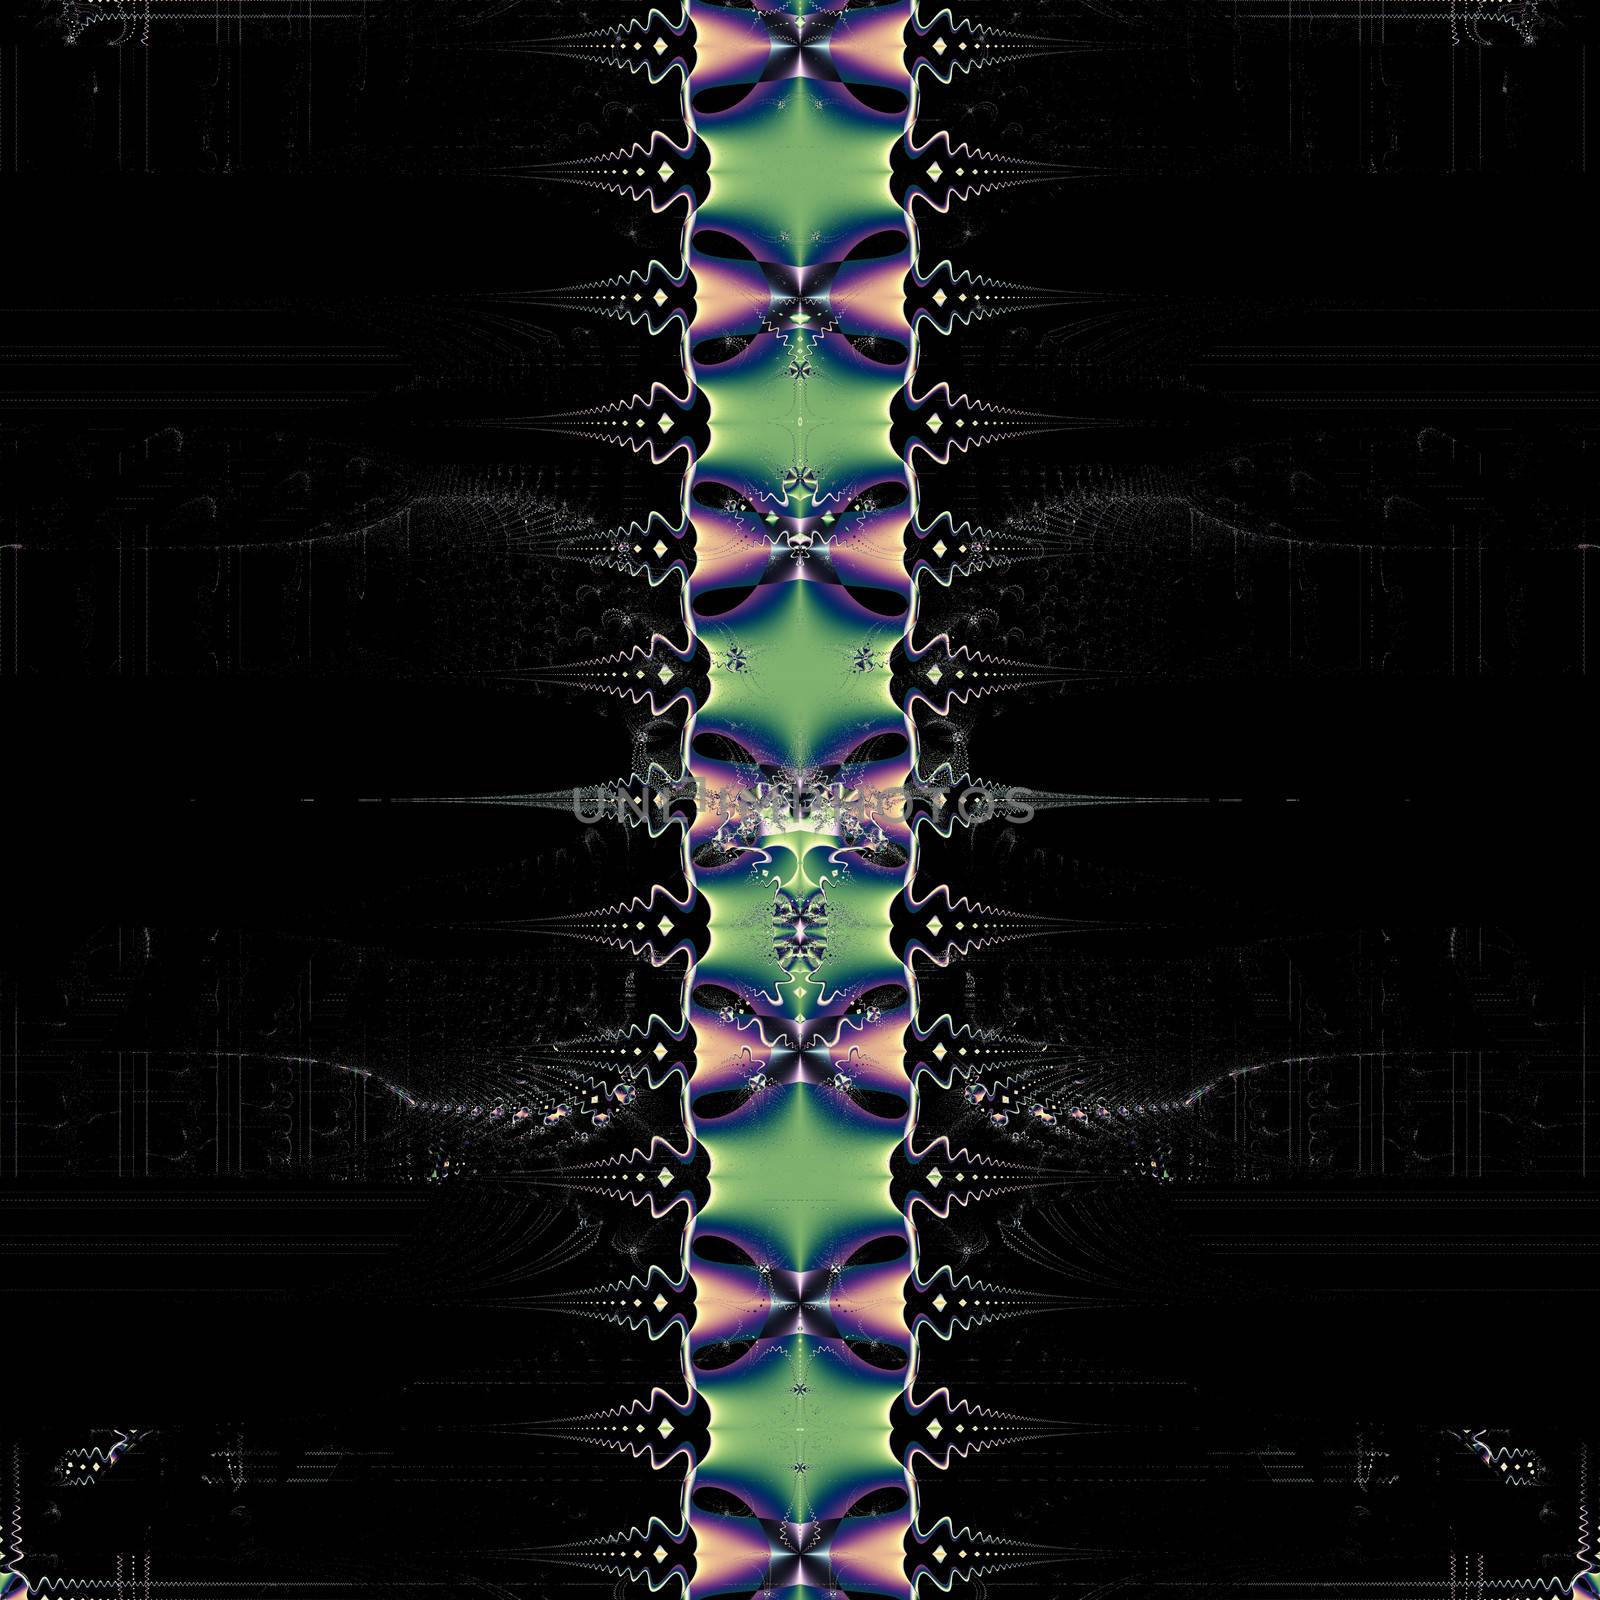 Elegant fractal design, abstract psychedelic art, magic path